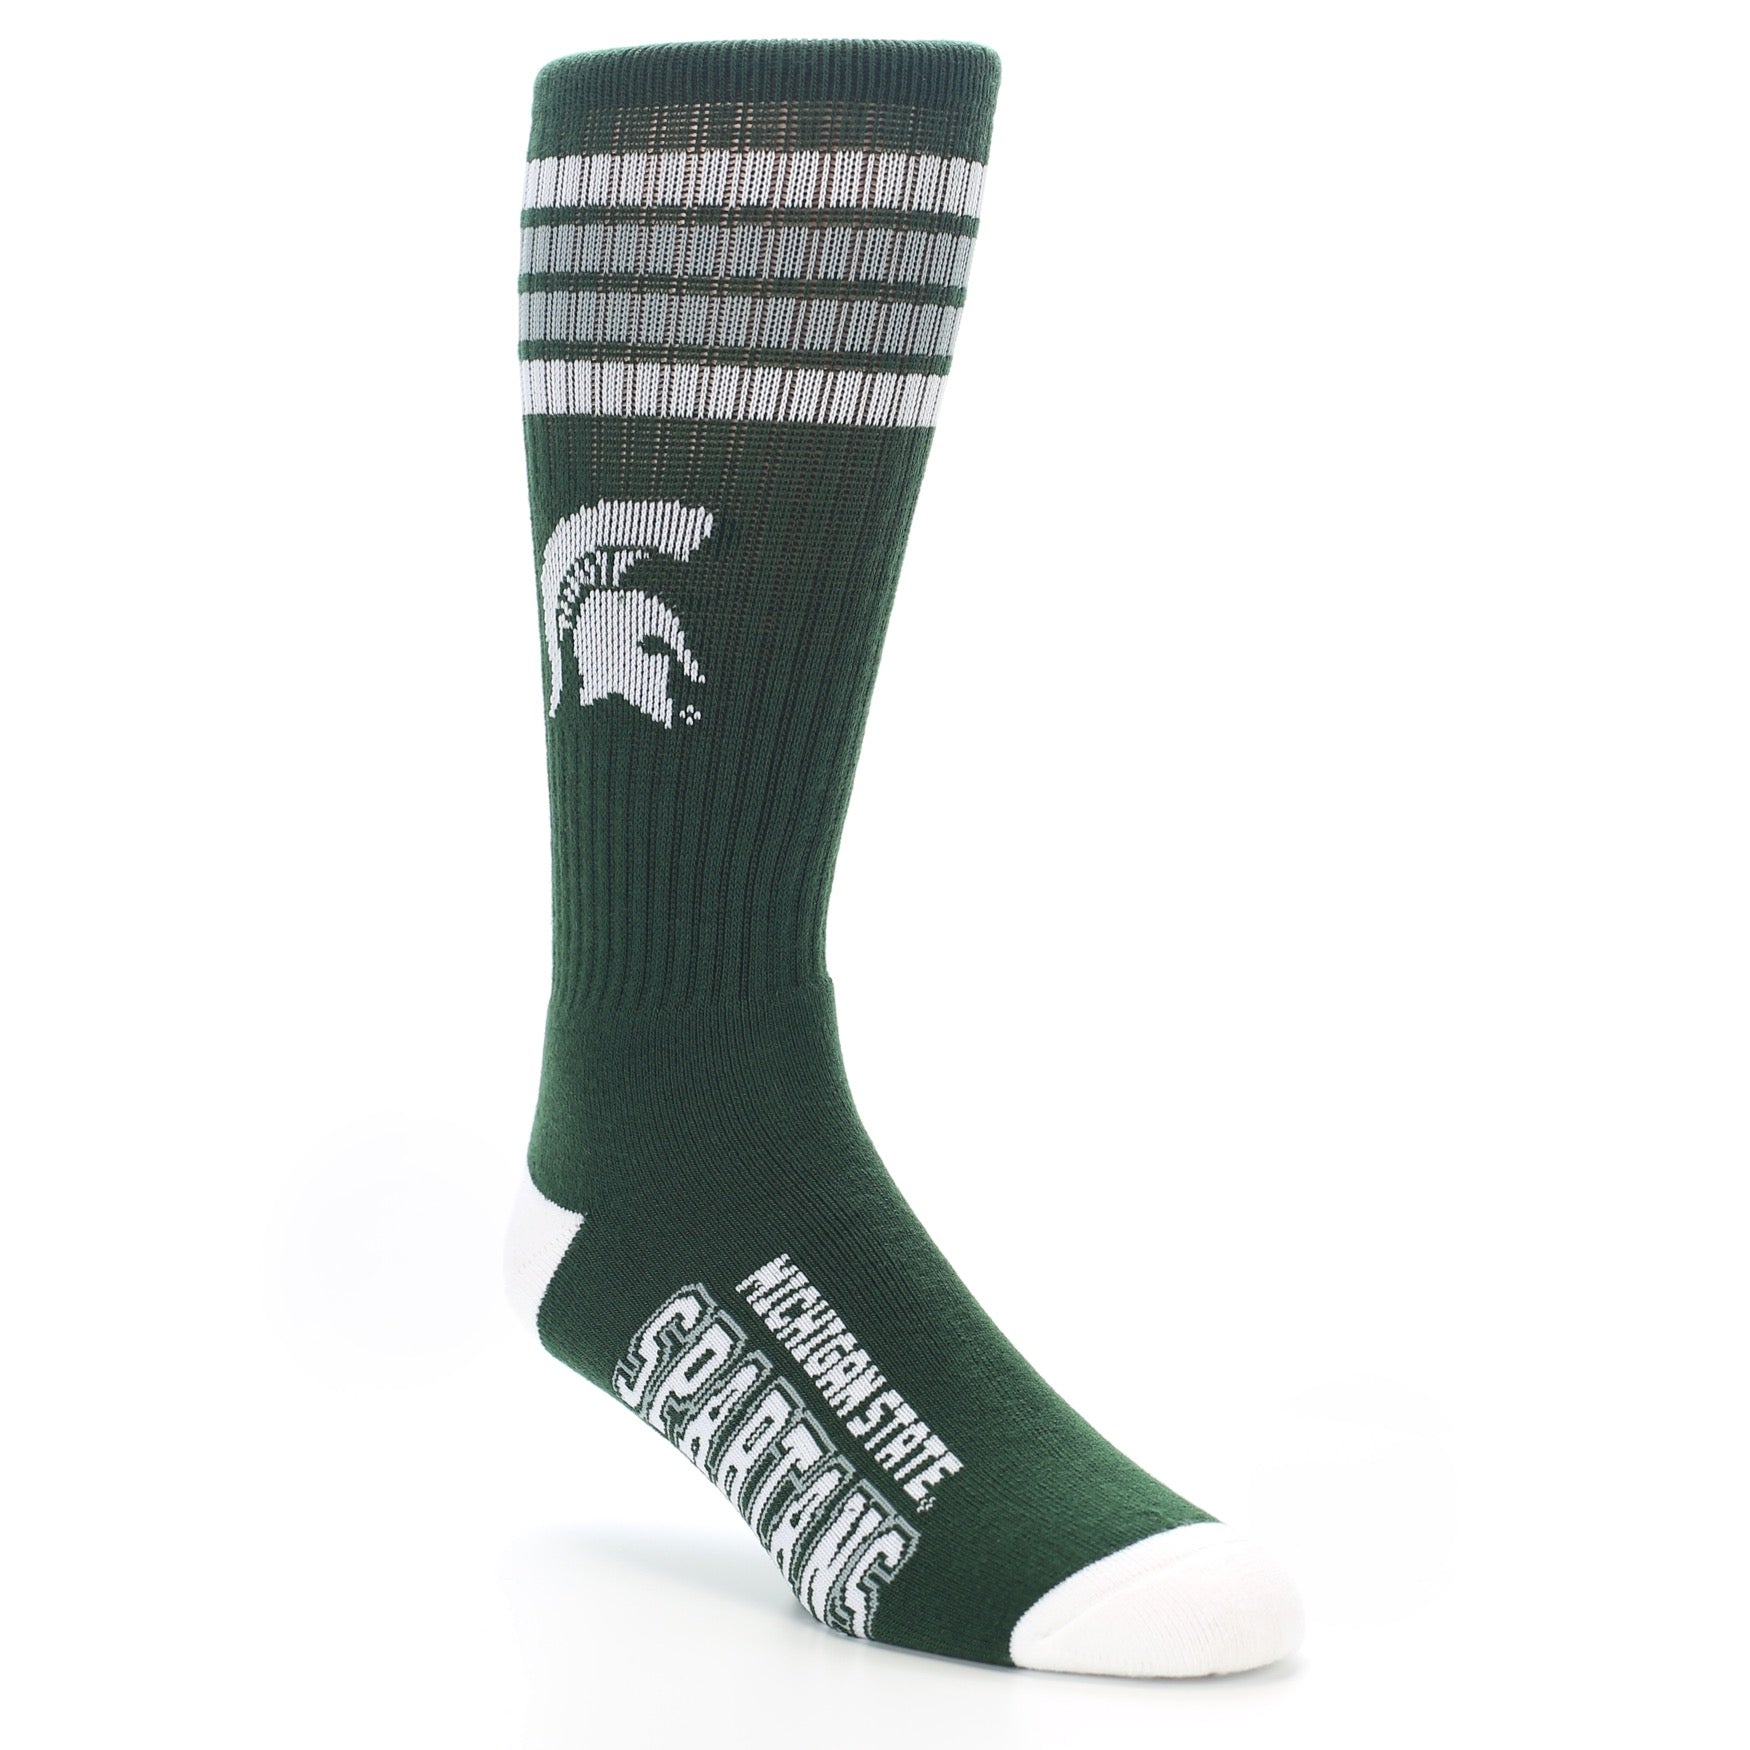 NCAA Michigan State Spartan Socks for Men